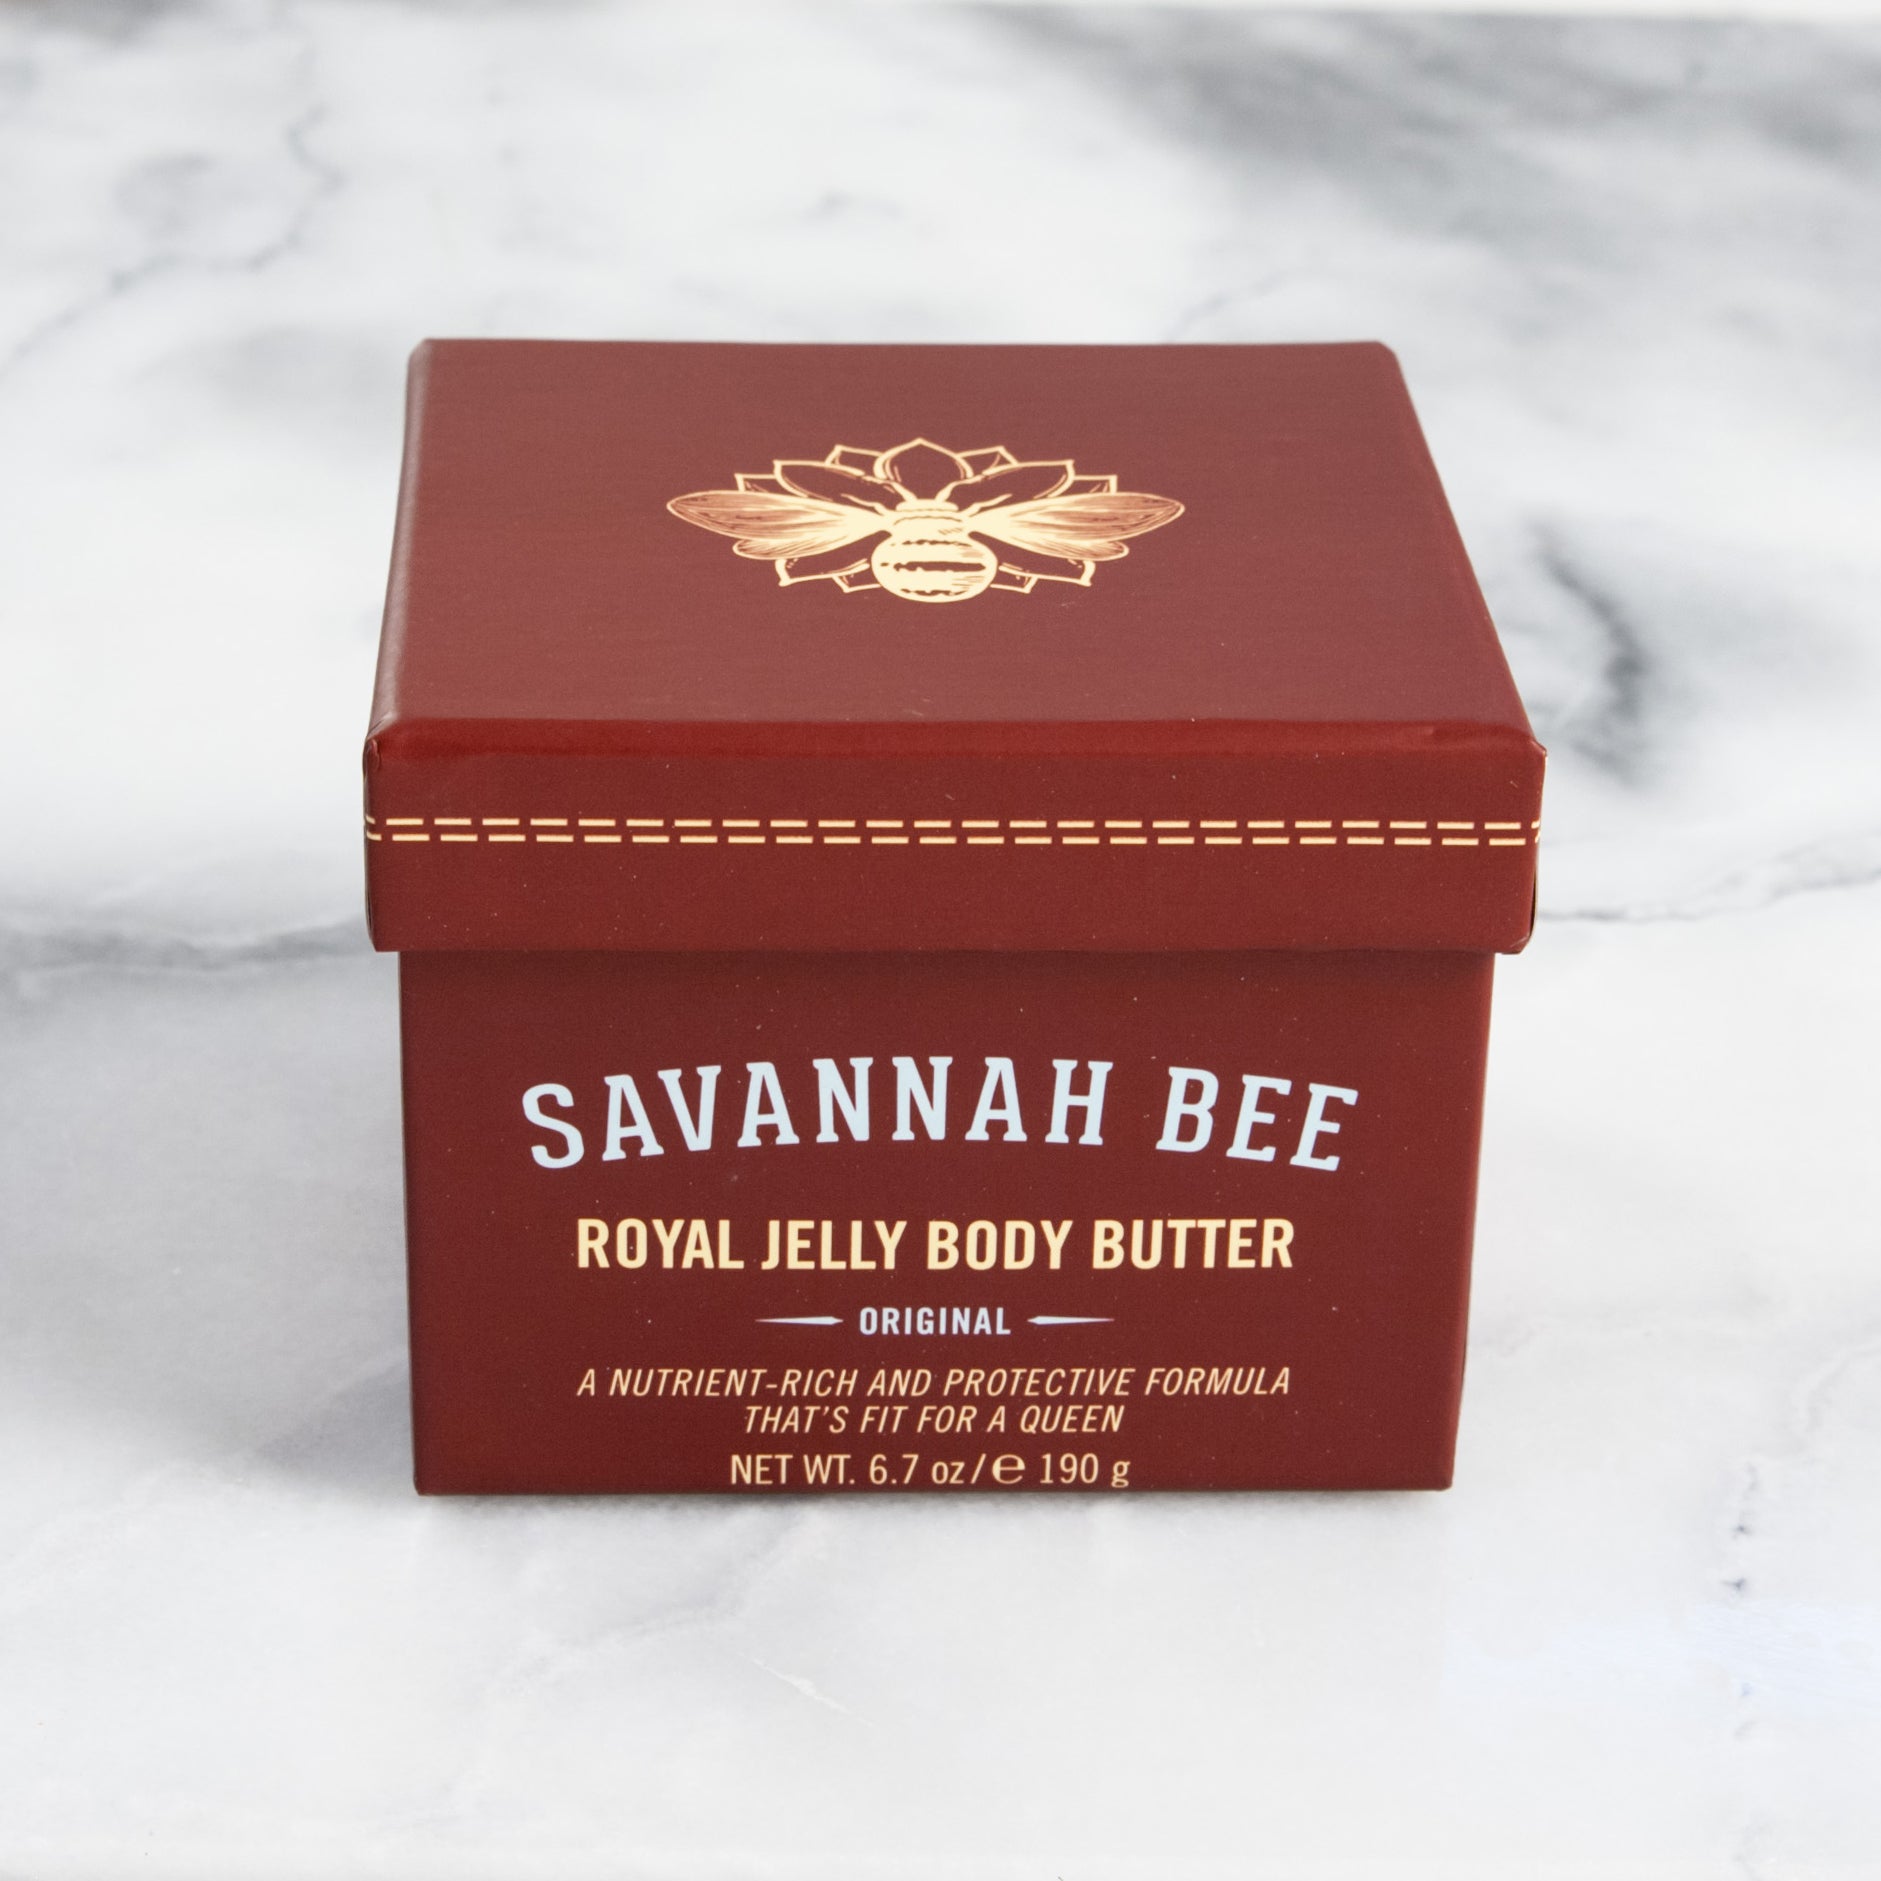 Savannah Bee Royal Jelly Body Butter - 6.7 oz jar